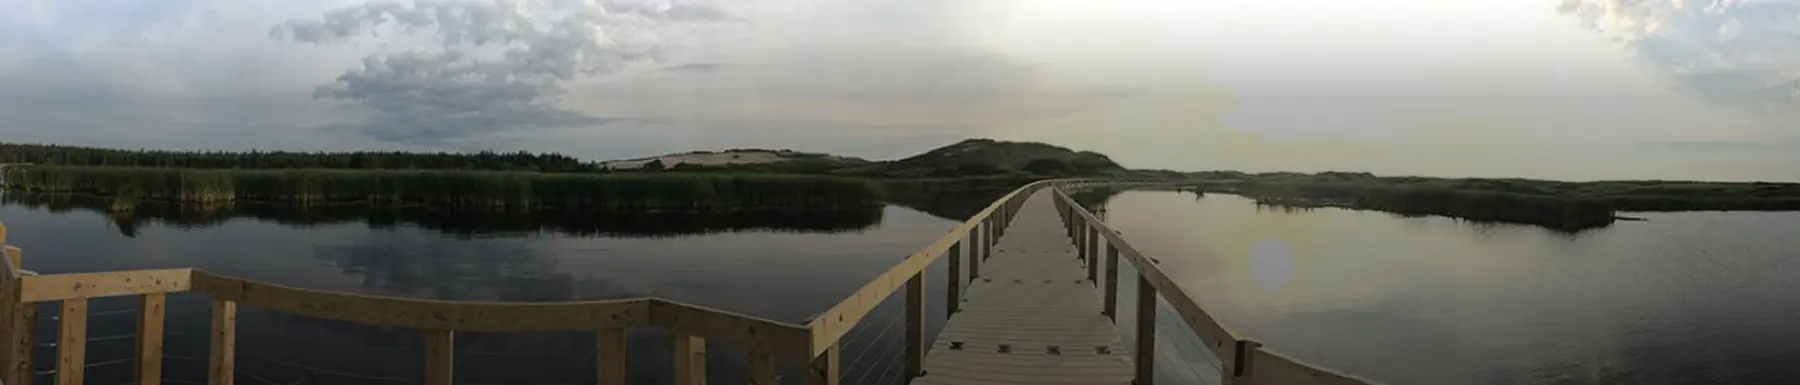 Long dock extending across wetlands